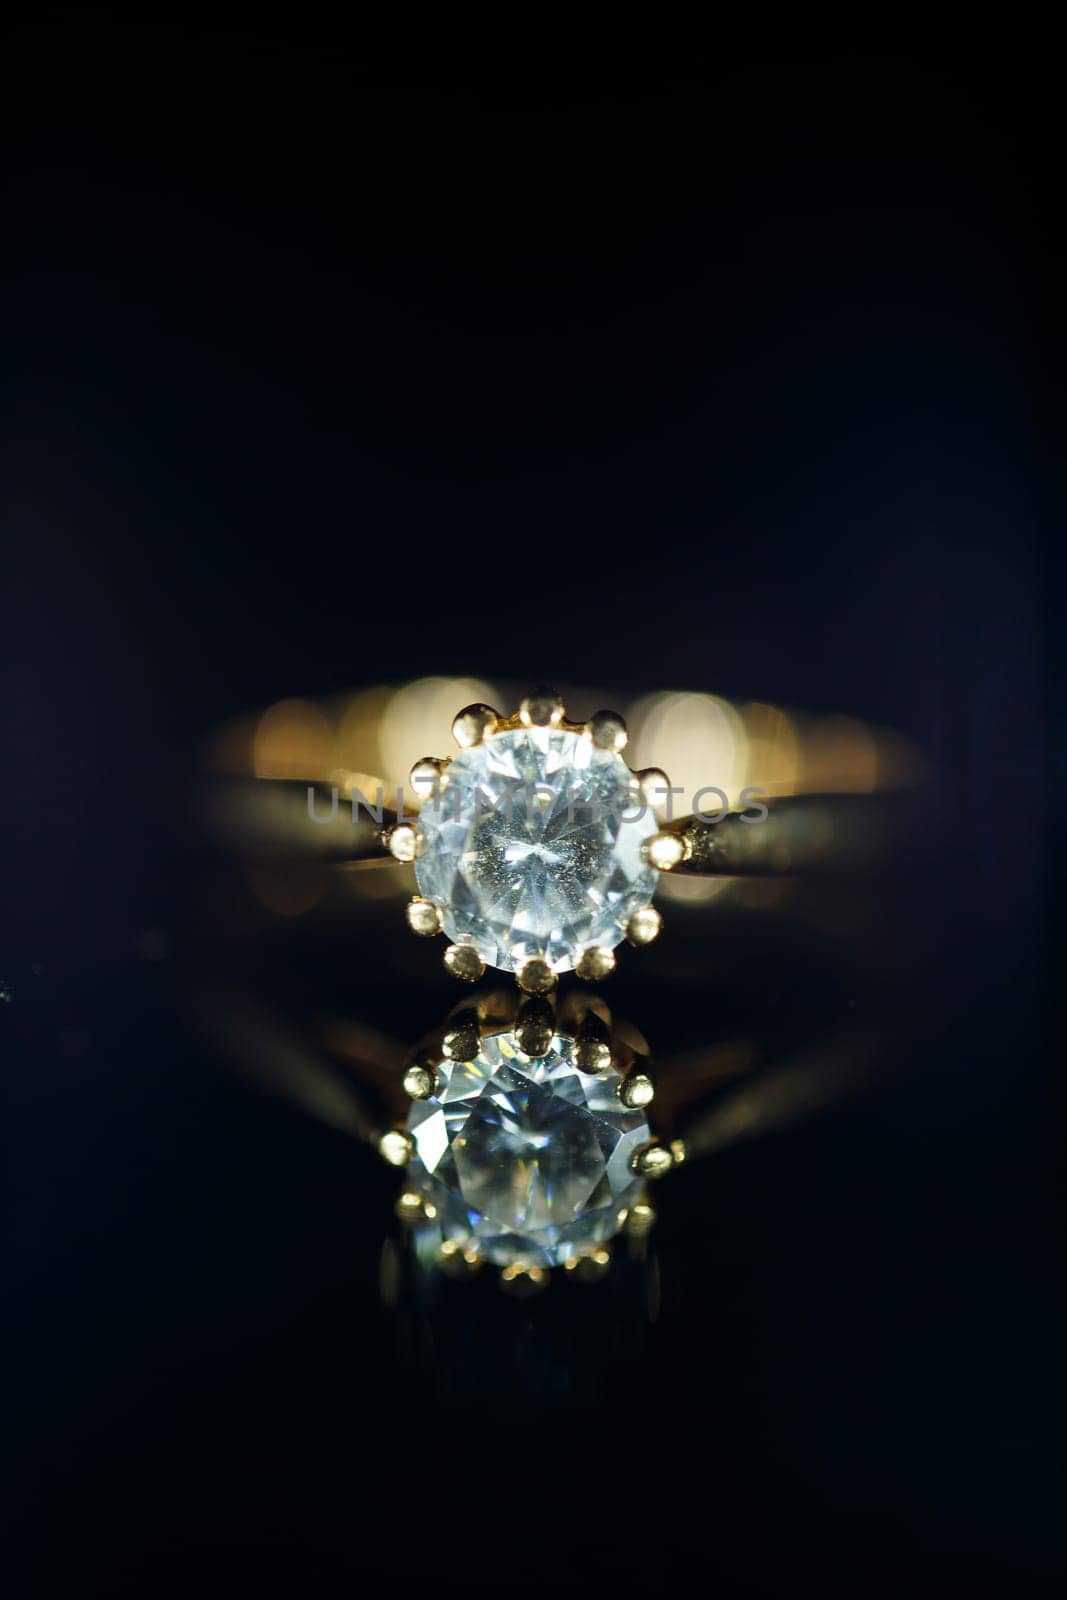 Gold wedding ring on black glass by Dmitrytph